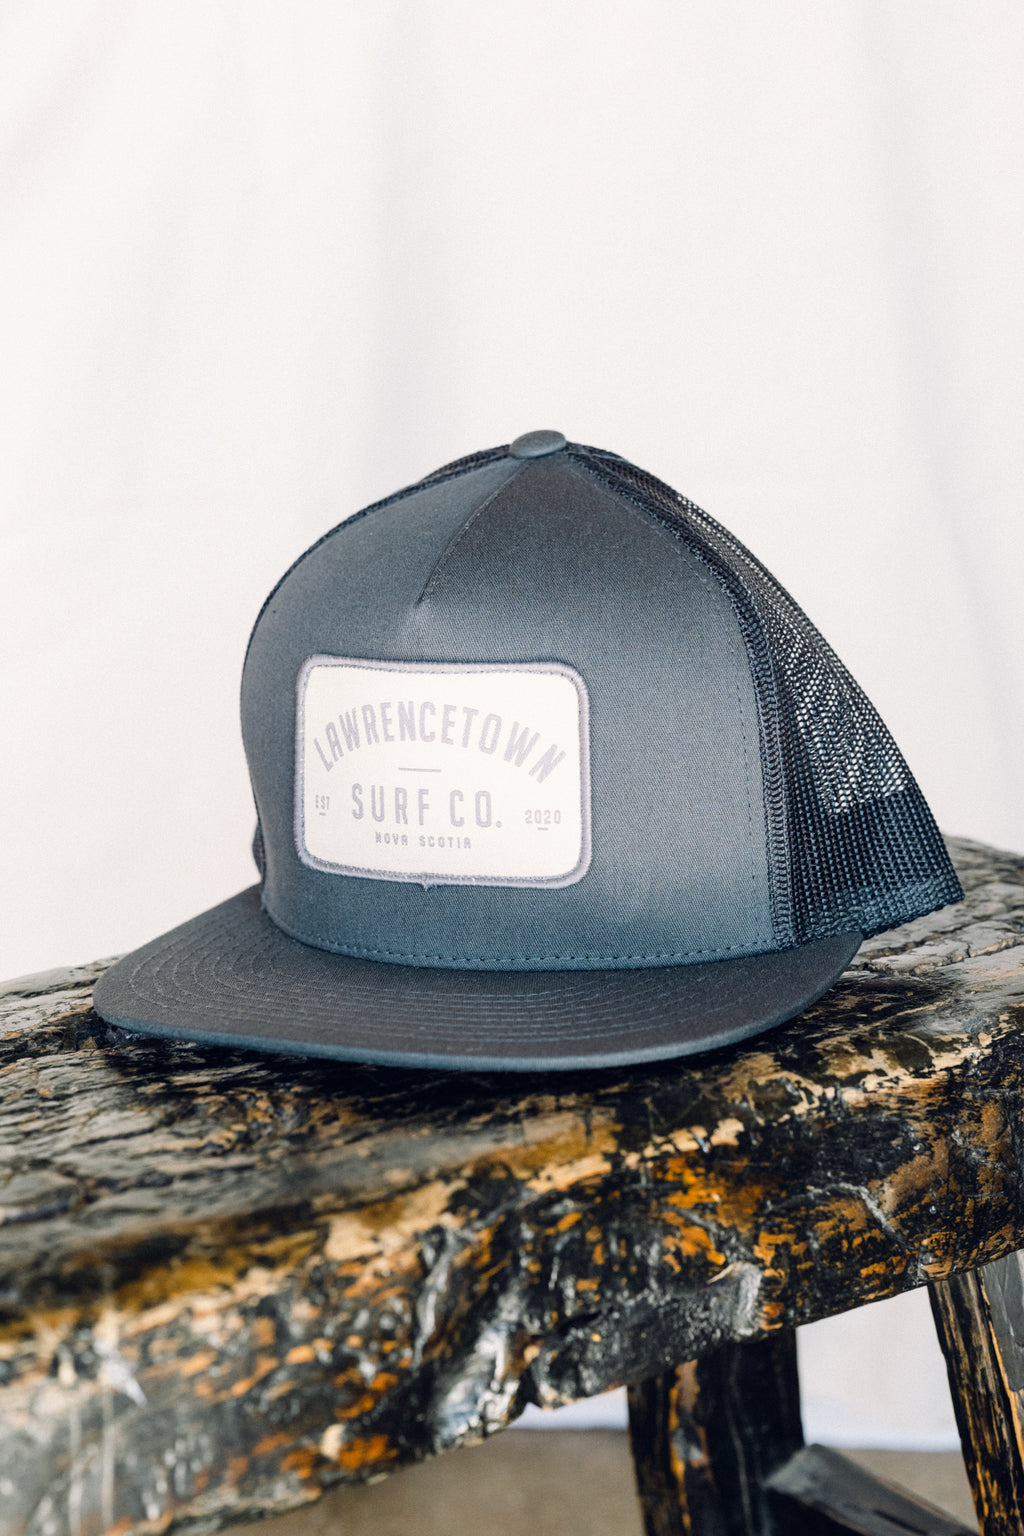 Lawrencetown Surf Co. Trucker Hat